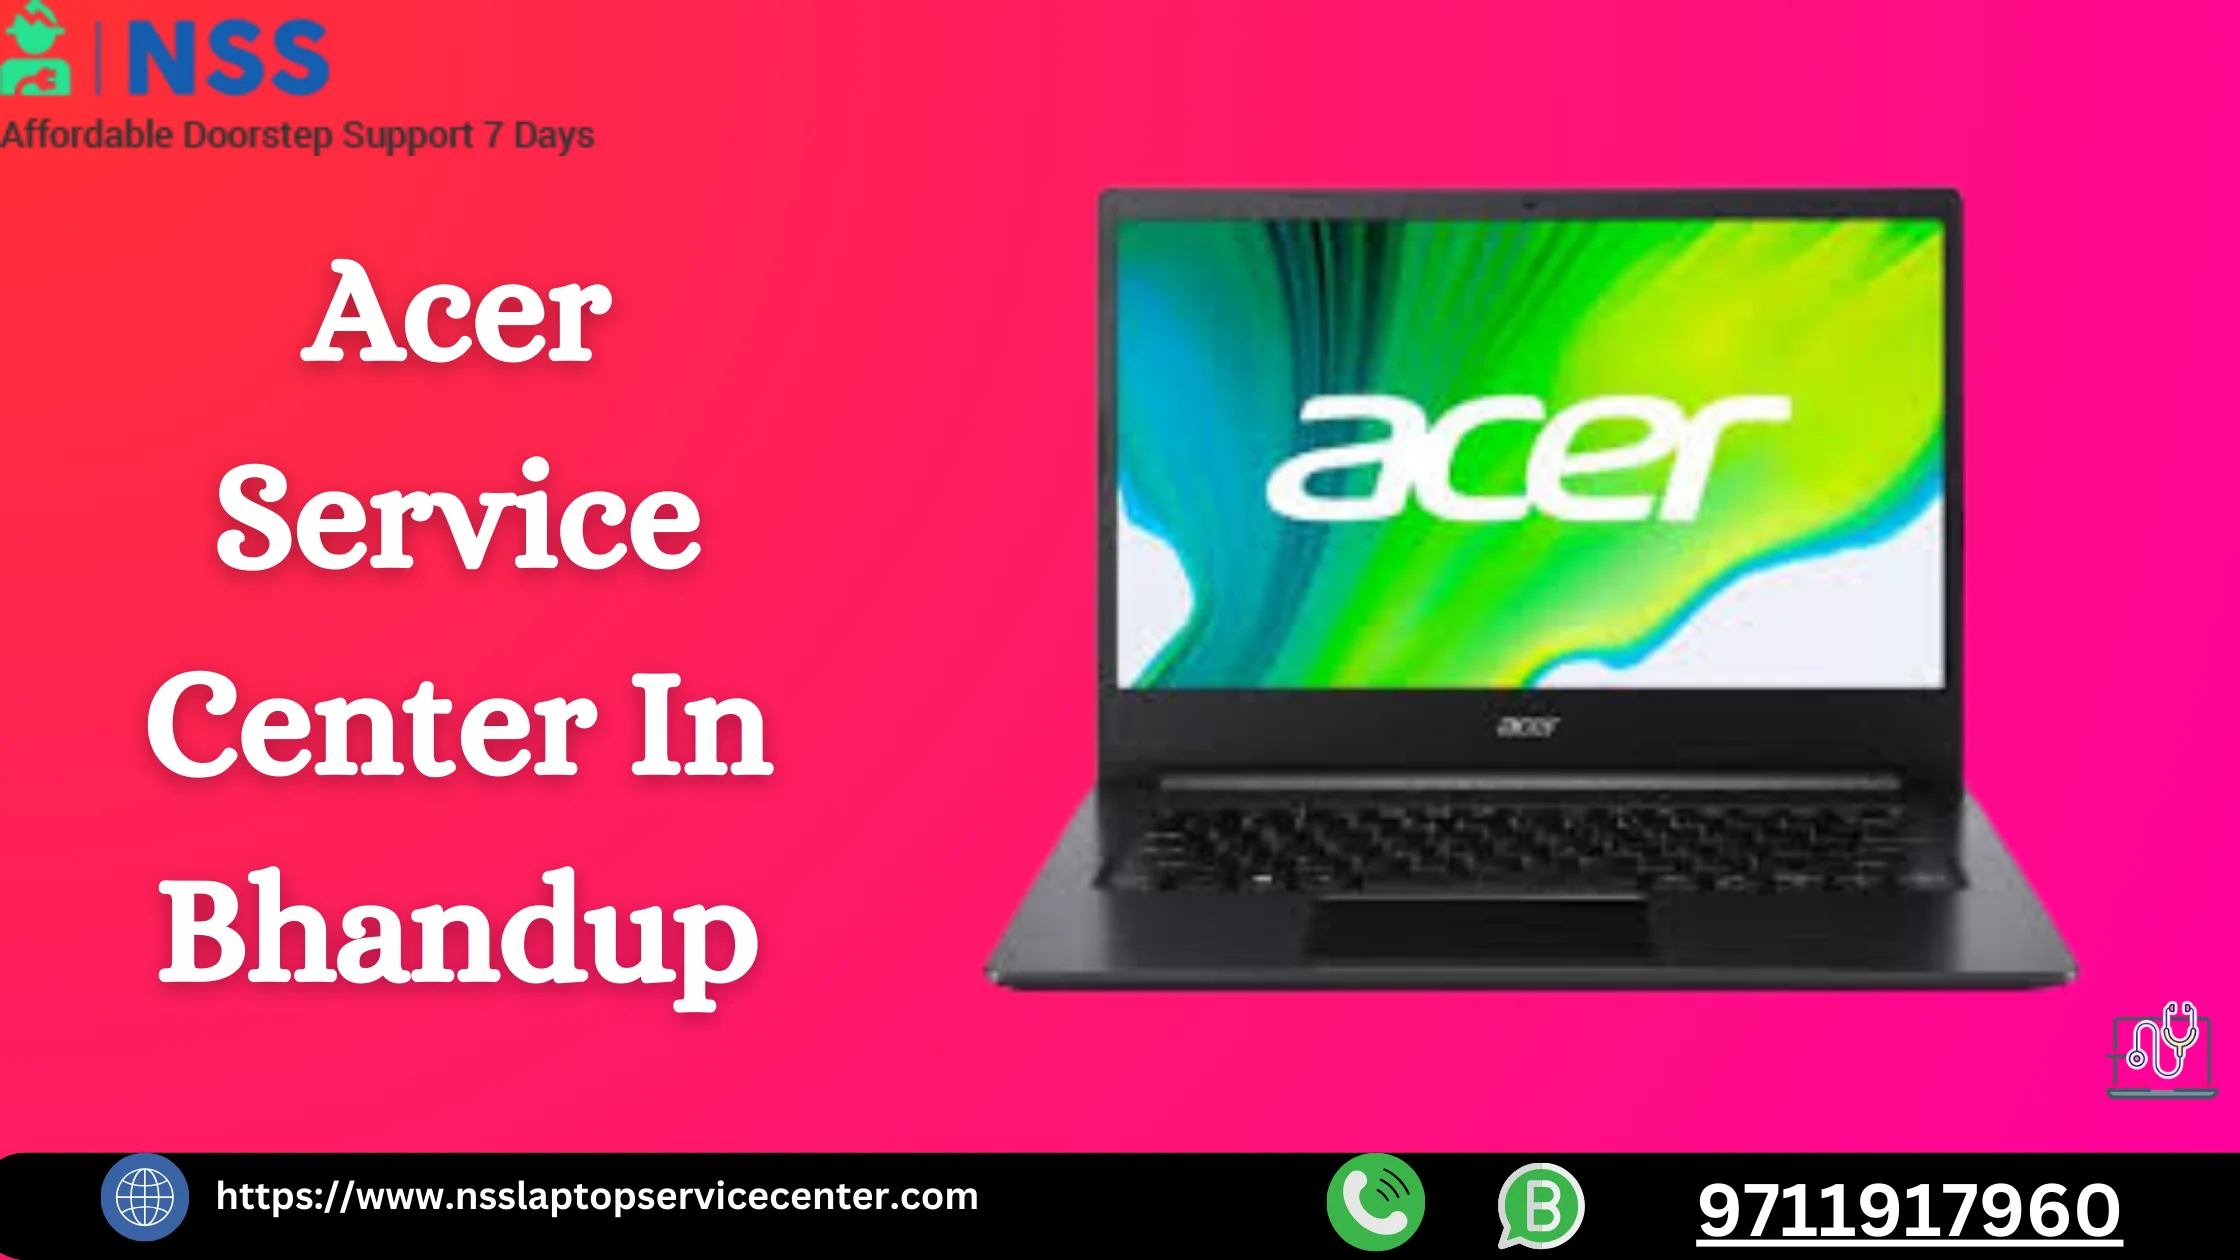 Acer Service Center in Bhandup Mumbai